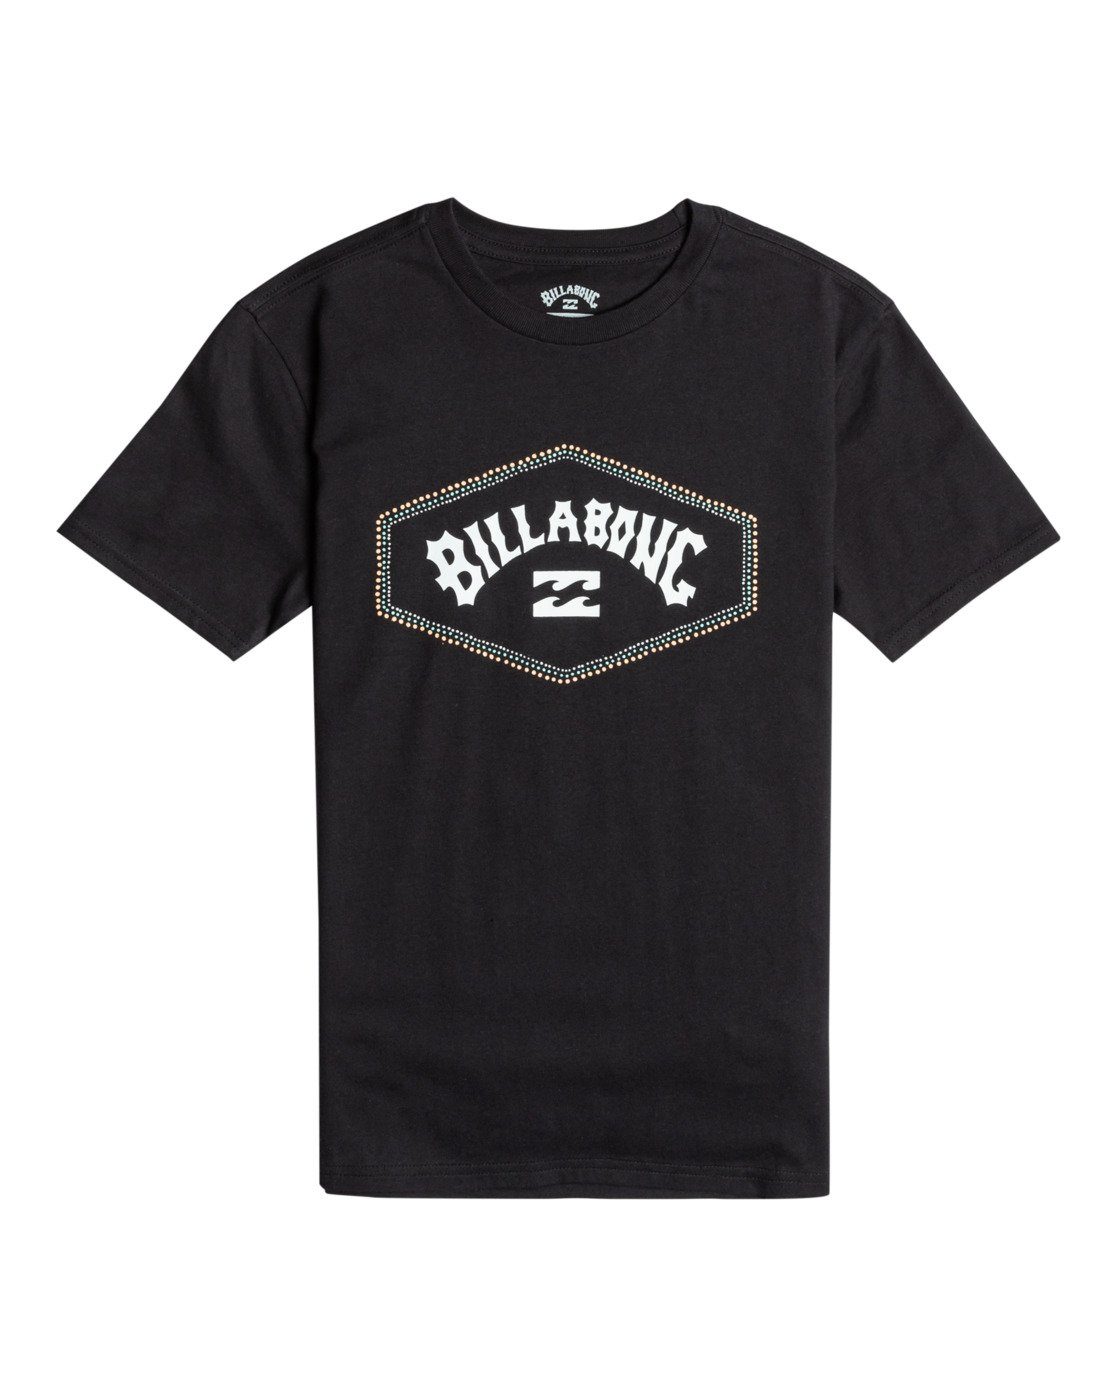 Billabong T-Shirt Exit Arch Black